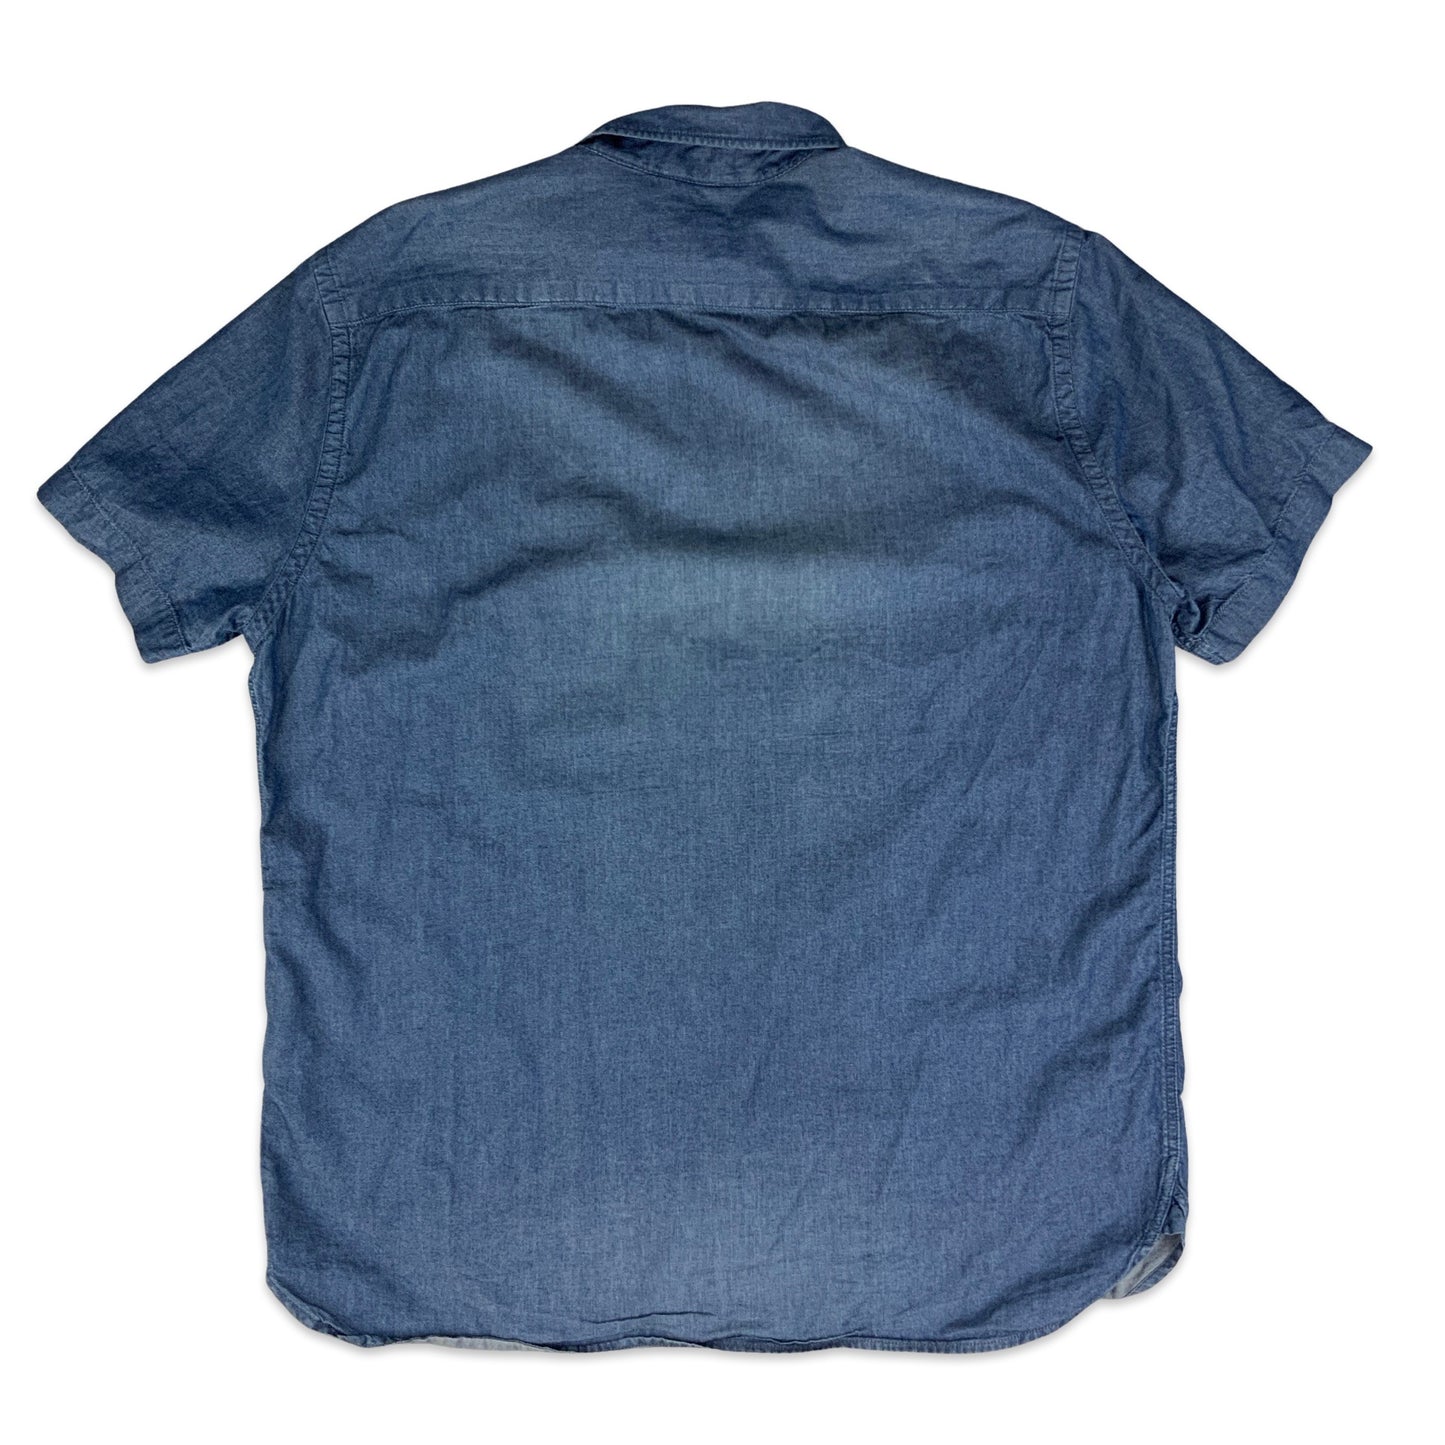 Levi's Blue Chambray Short Sleeved Shirt M L